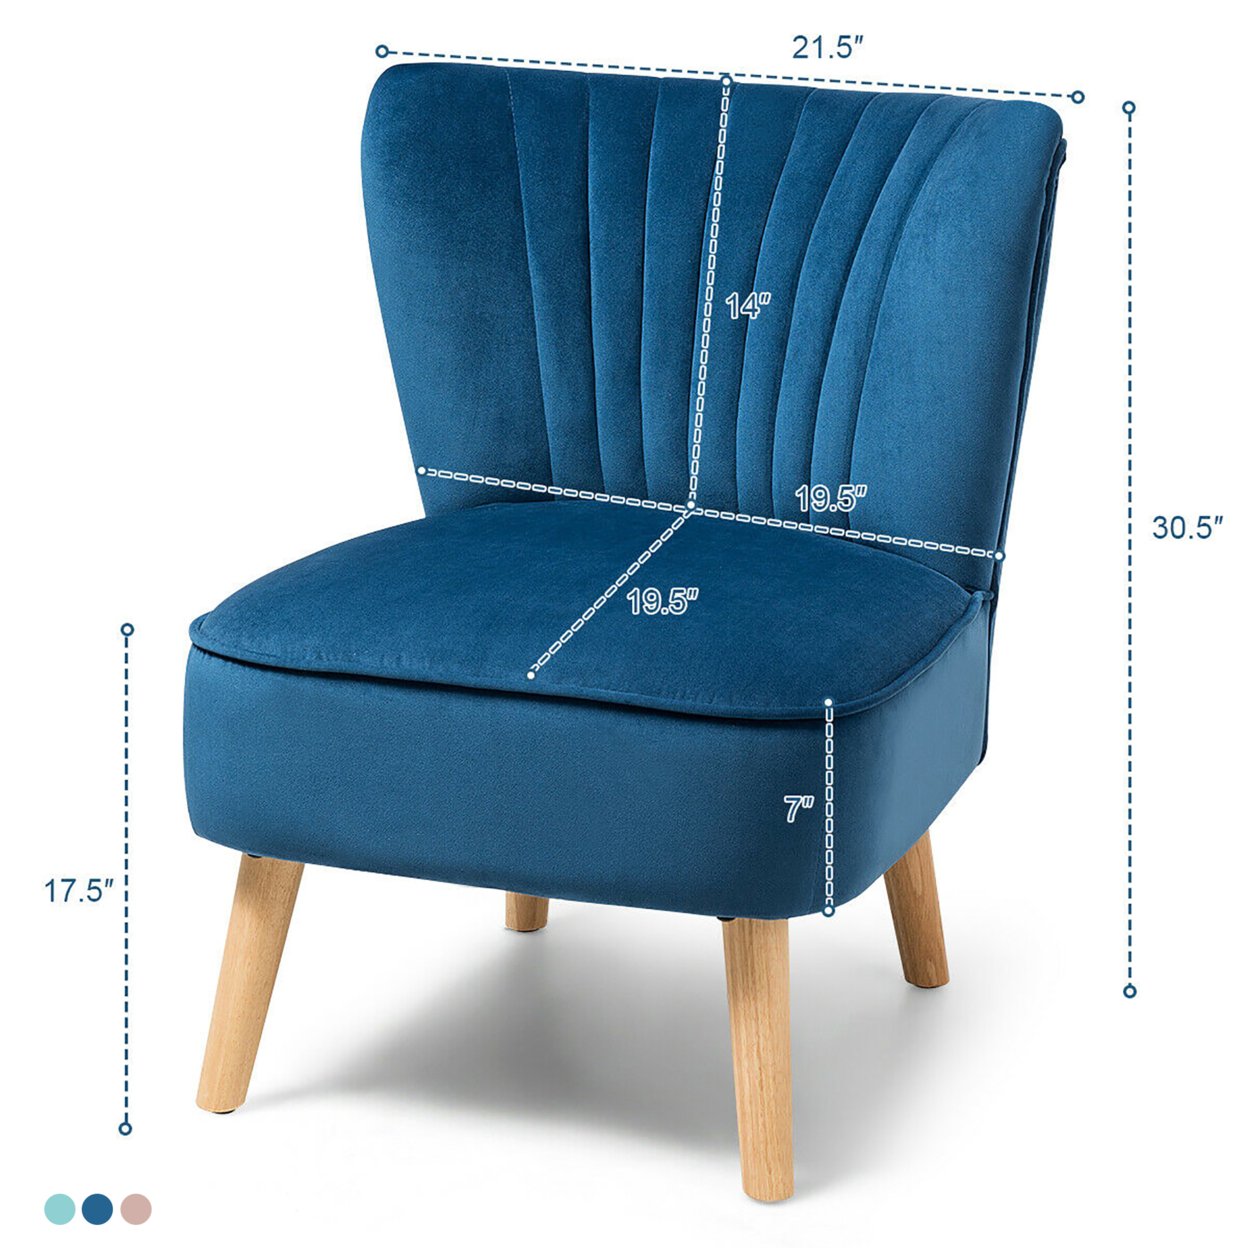 2PCS Accent Chair Armless Leisure Chair Single Sofa W/ Wood Legs Green/Blue/Pink - Blue